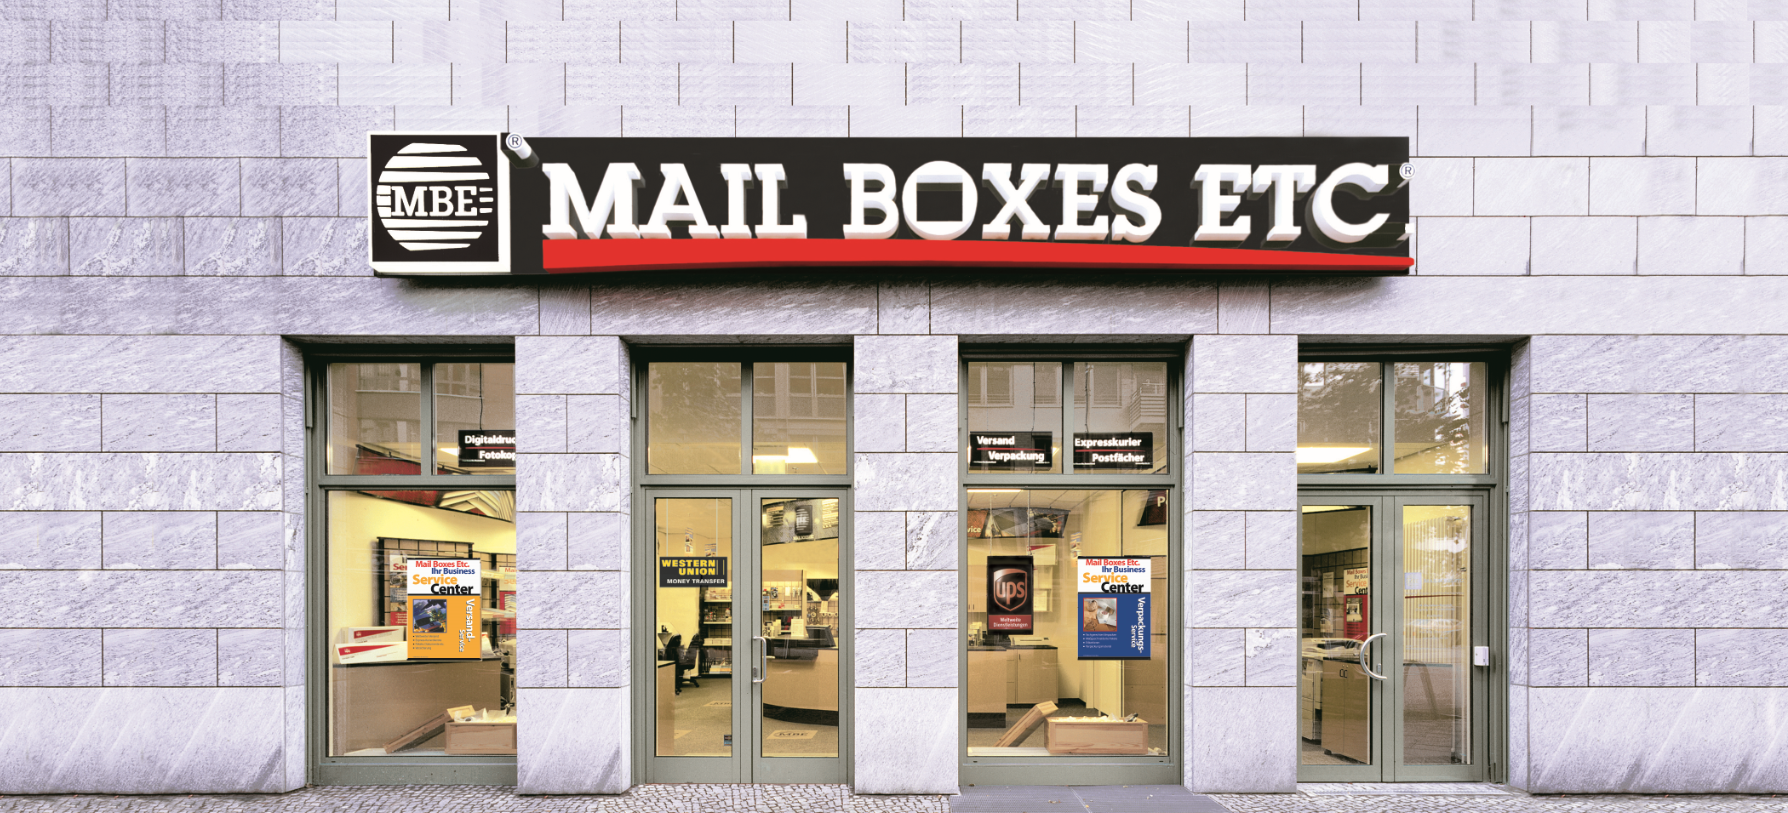 Mail Boxes Etc. - Center MBE 0078, Am Knappenberg 36 in Dortmund